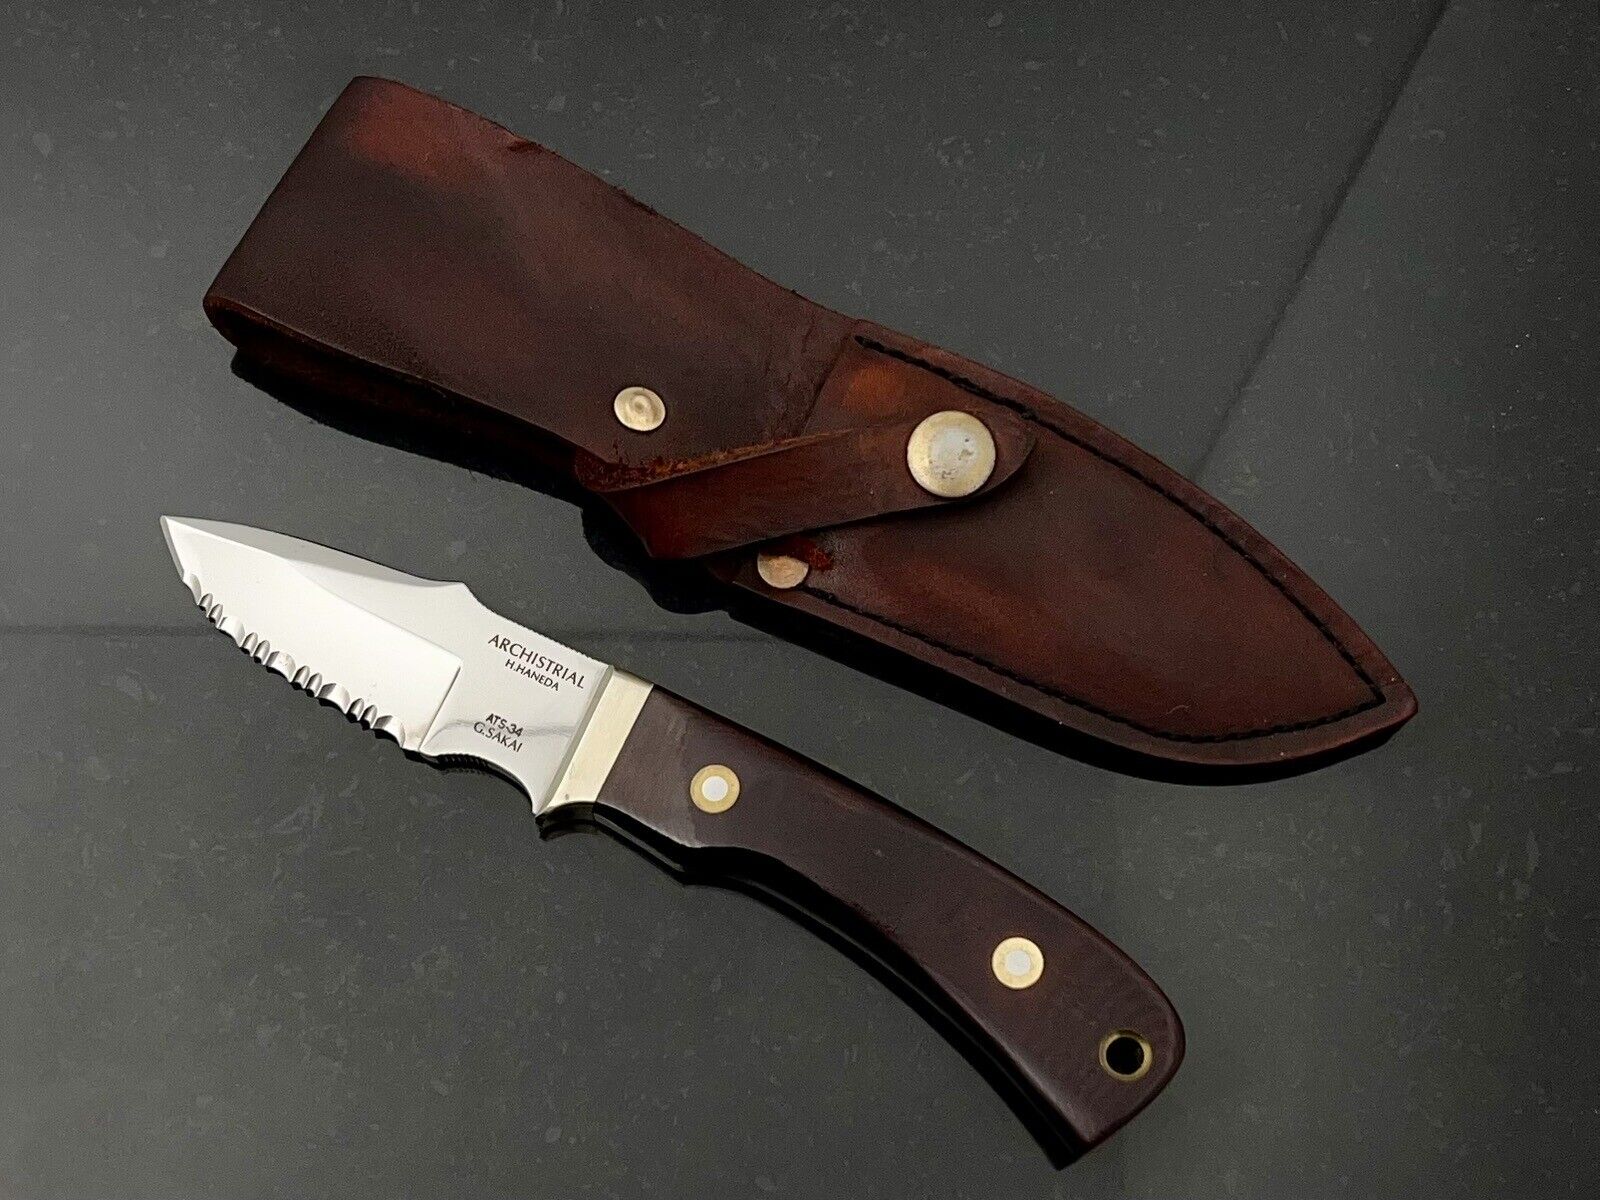 VTG G. Sakai Archistrial Fixed Blade Knife ATS-34 Steel Blade Micarta Handle